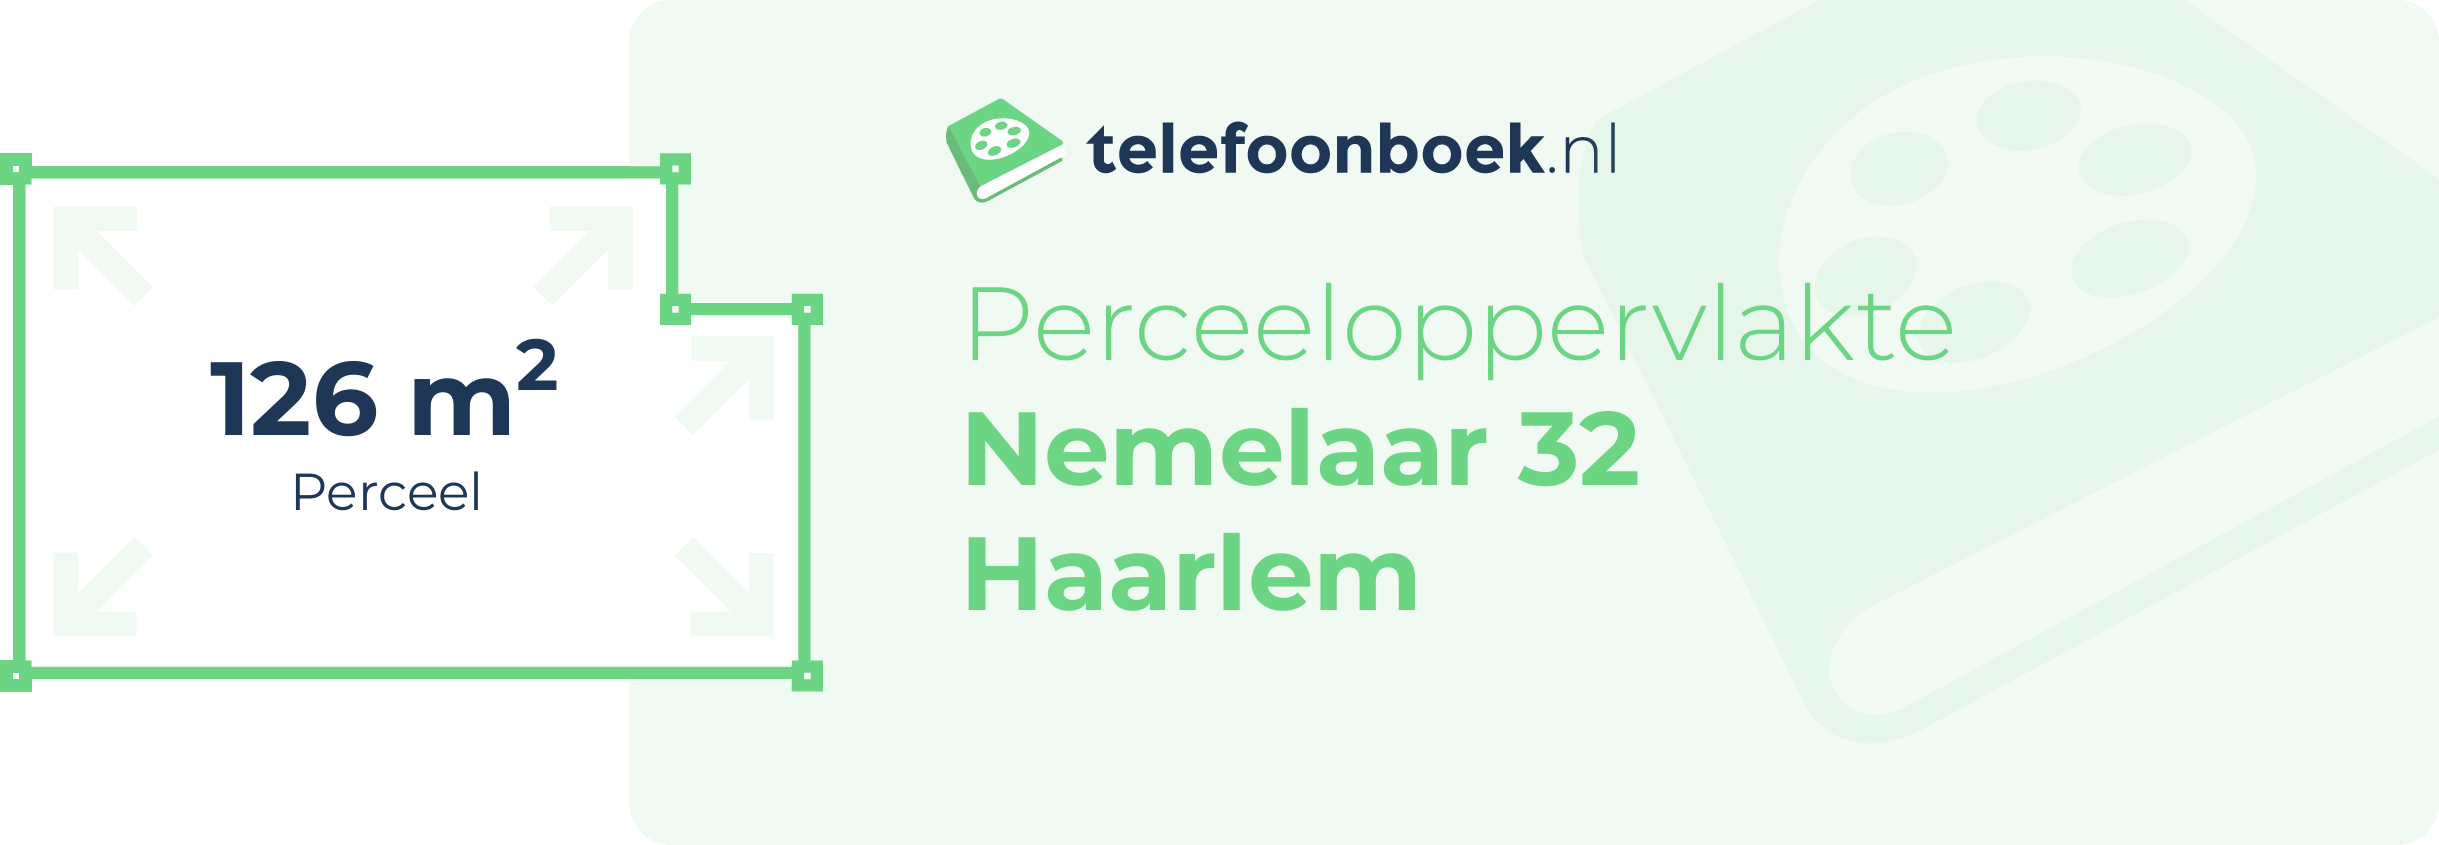 Perceeloppervlakte Nemelaar 32 Haarlem